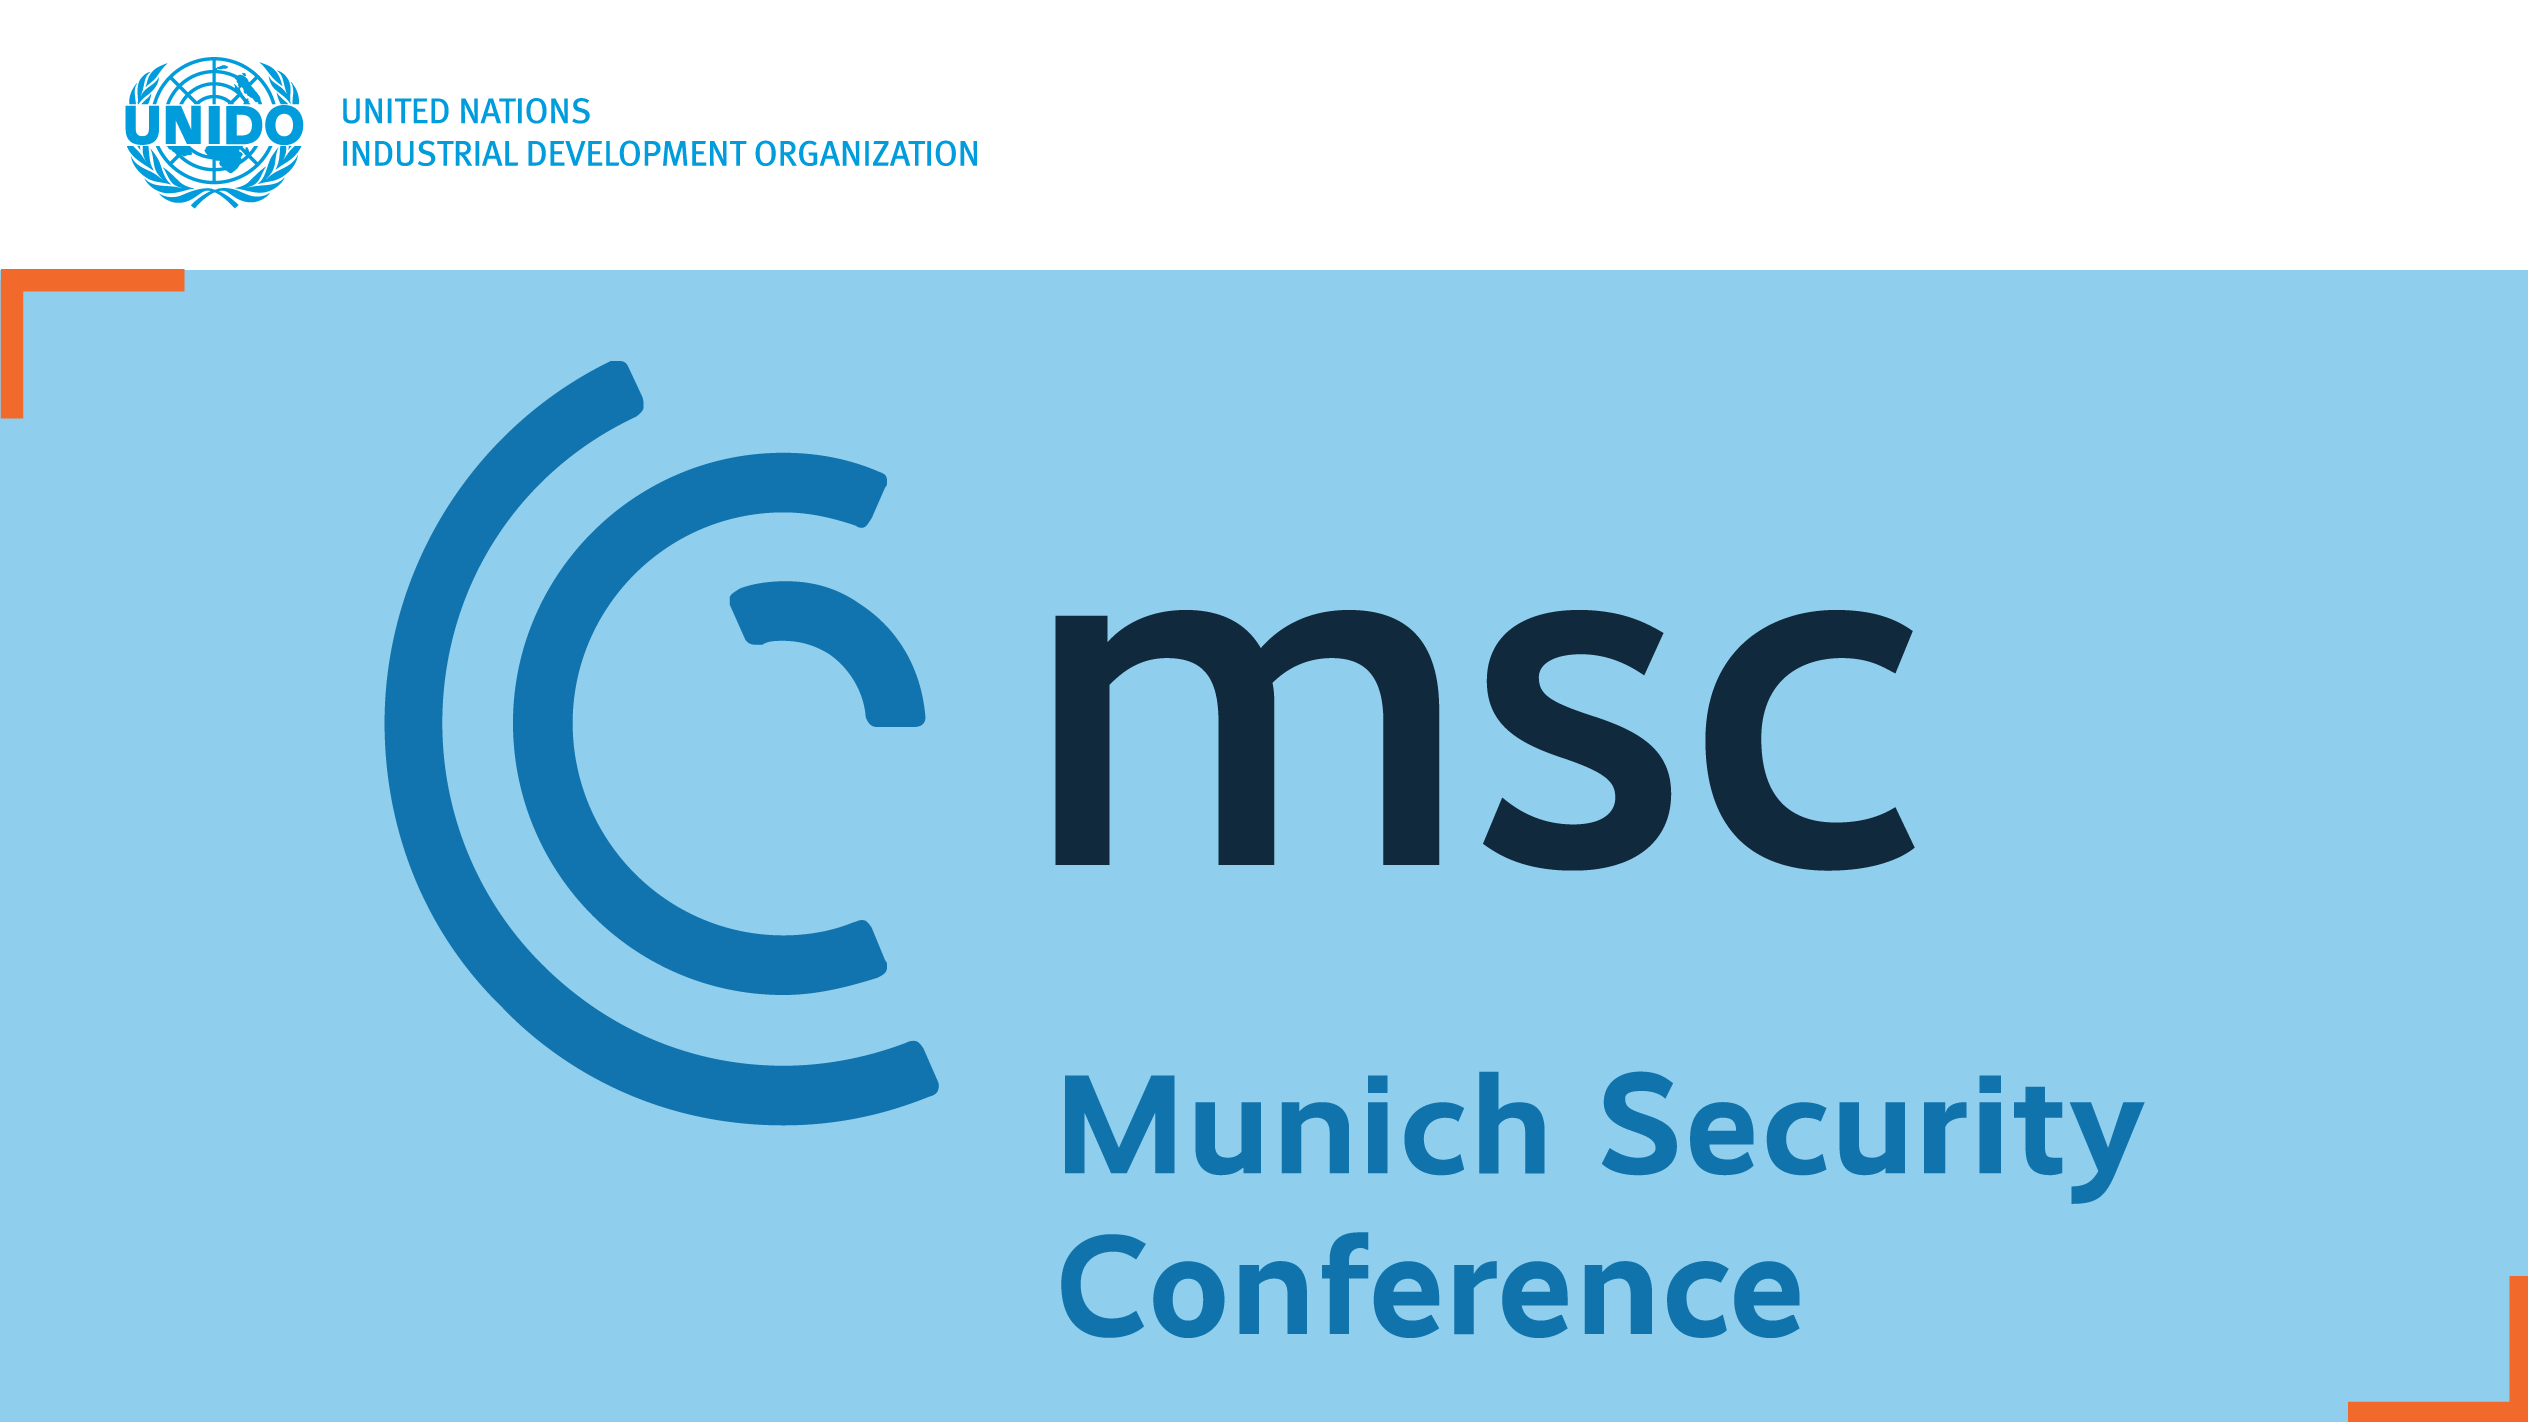 Munich Security Conference UNIDO